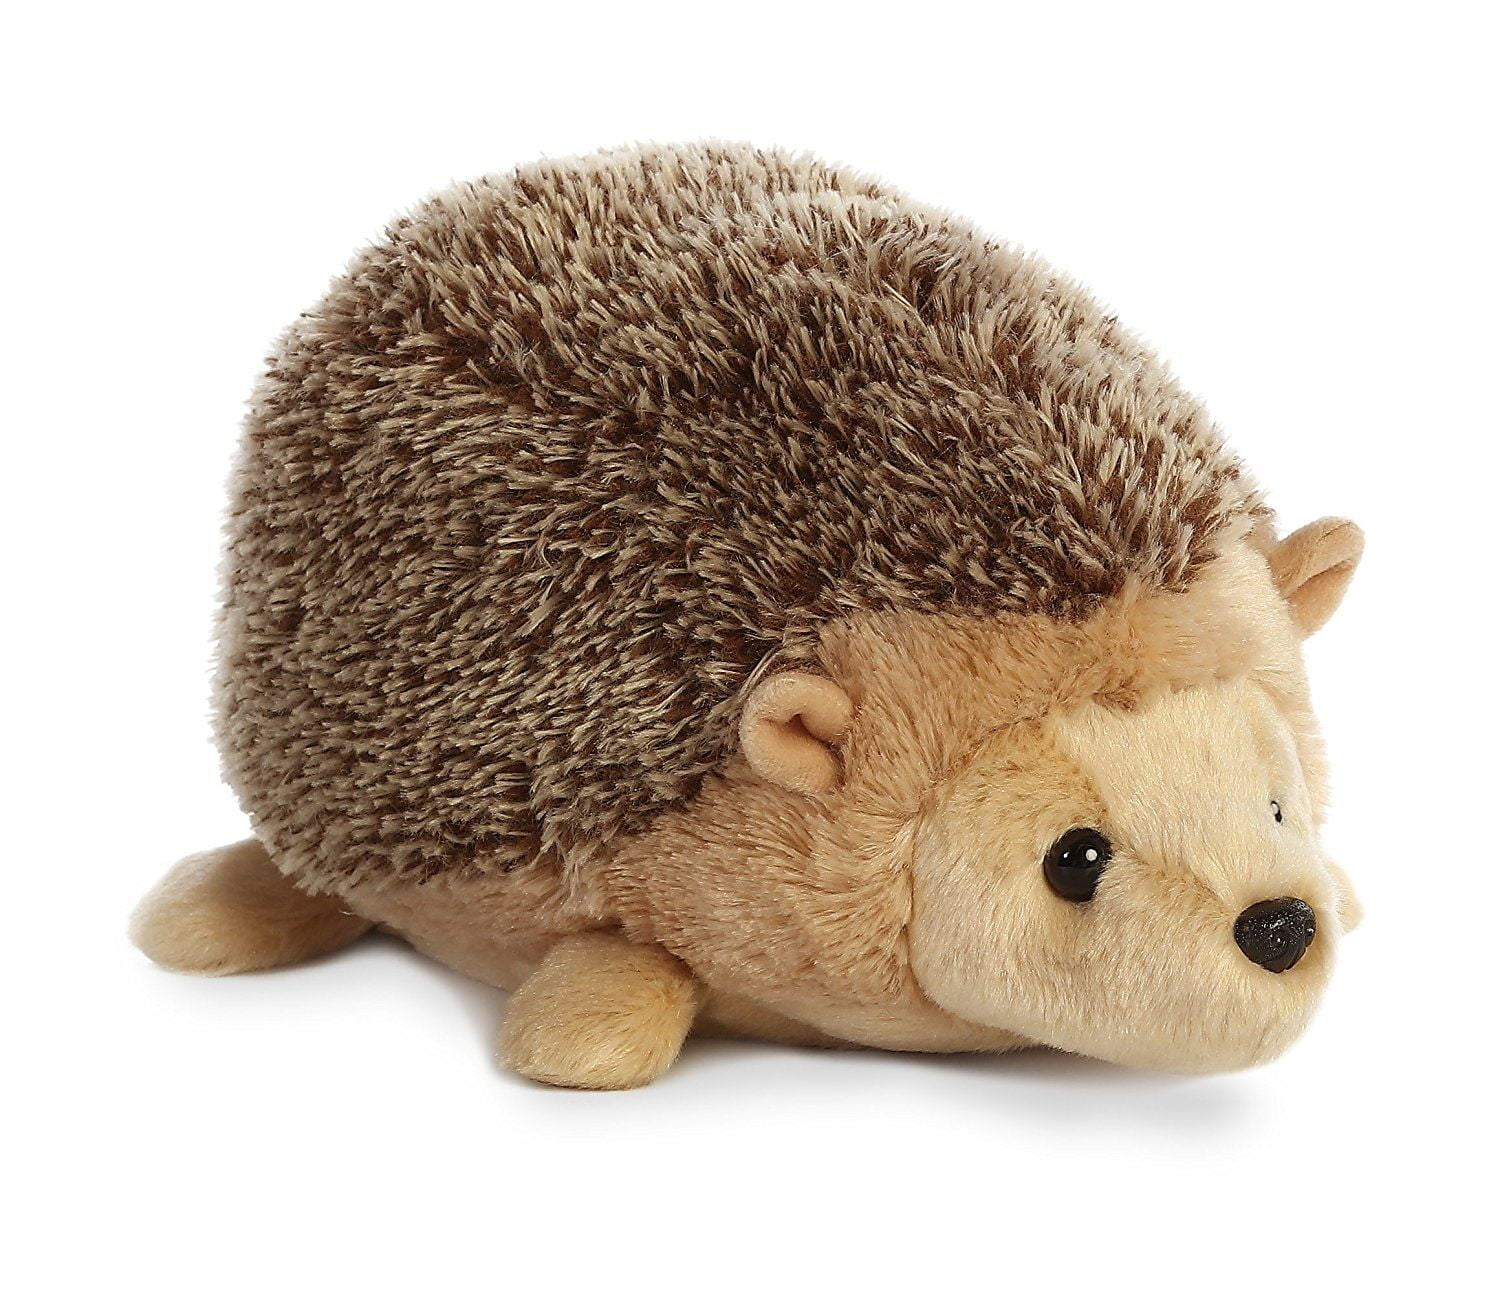 Hedgehog Flopsie 12 Inch - Stuffed Animal by Aurora Plush (31575) - Walmart.com